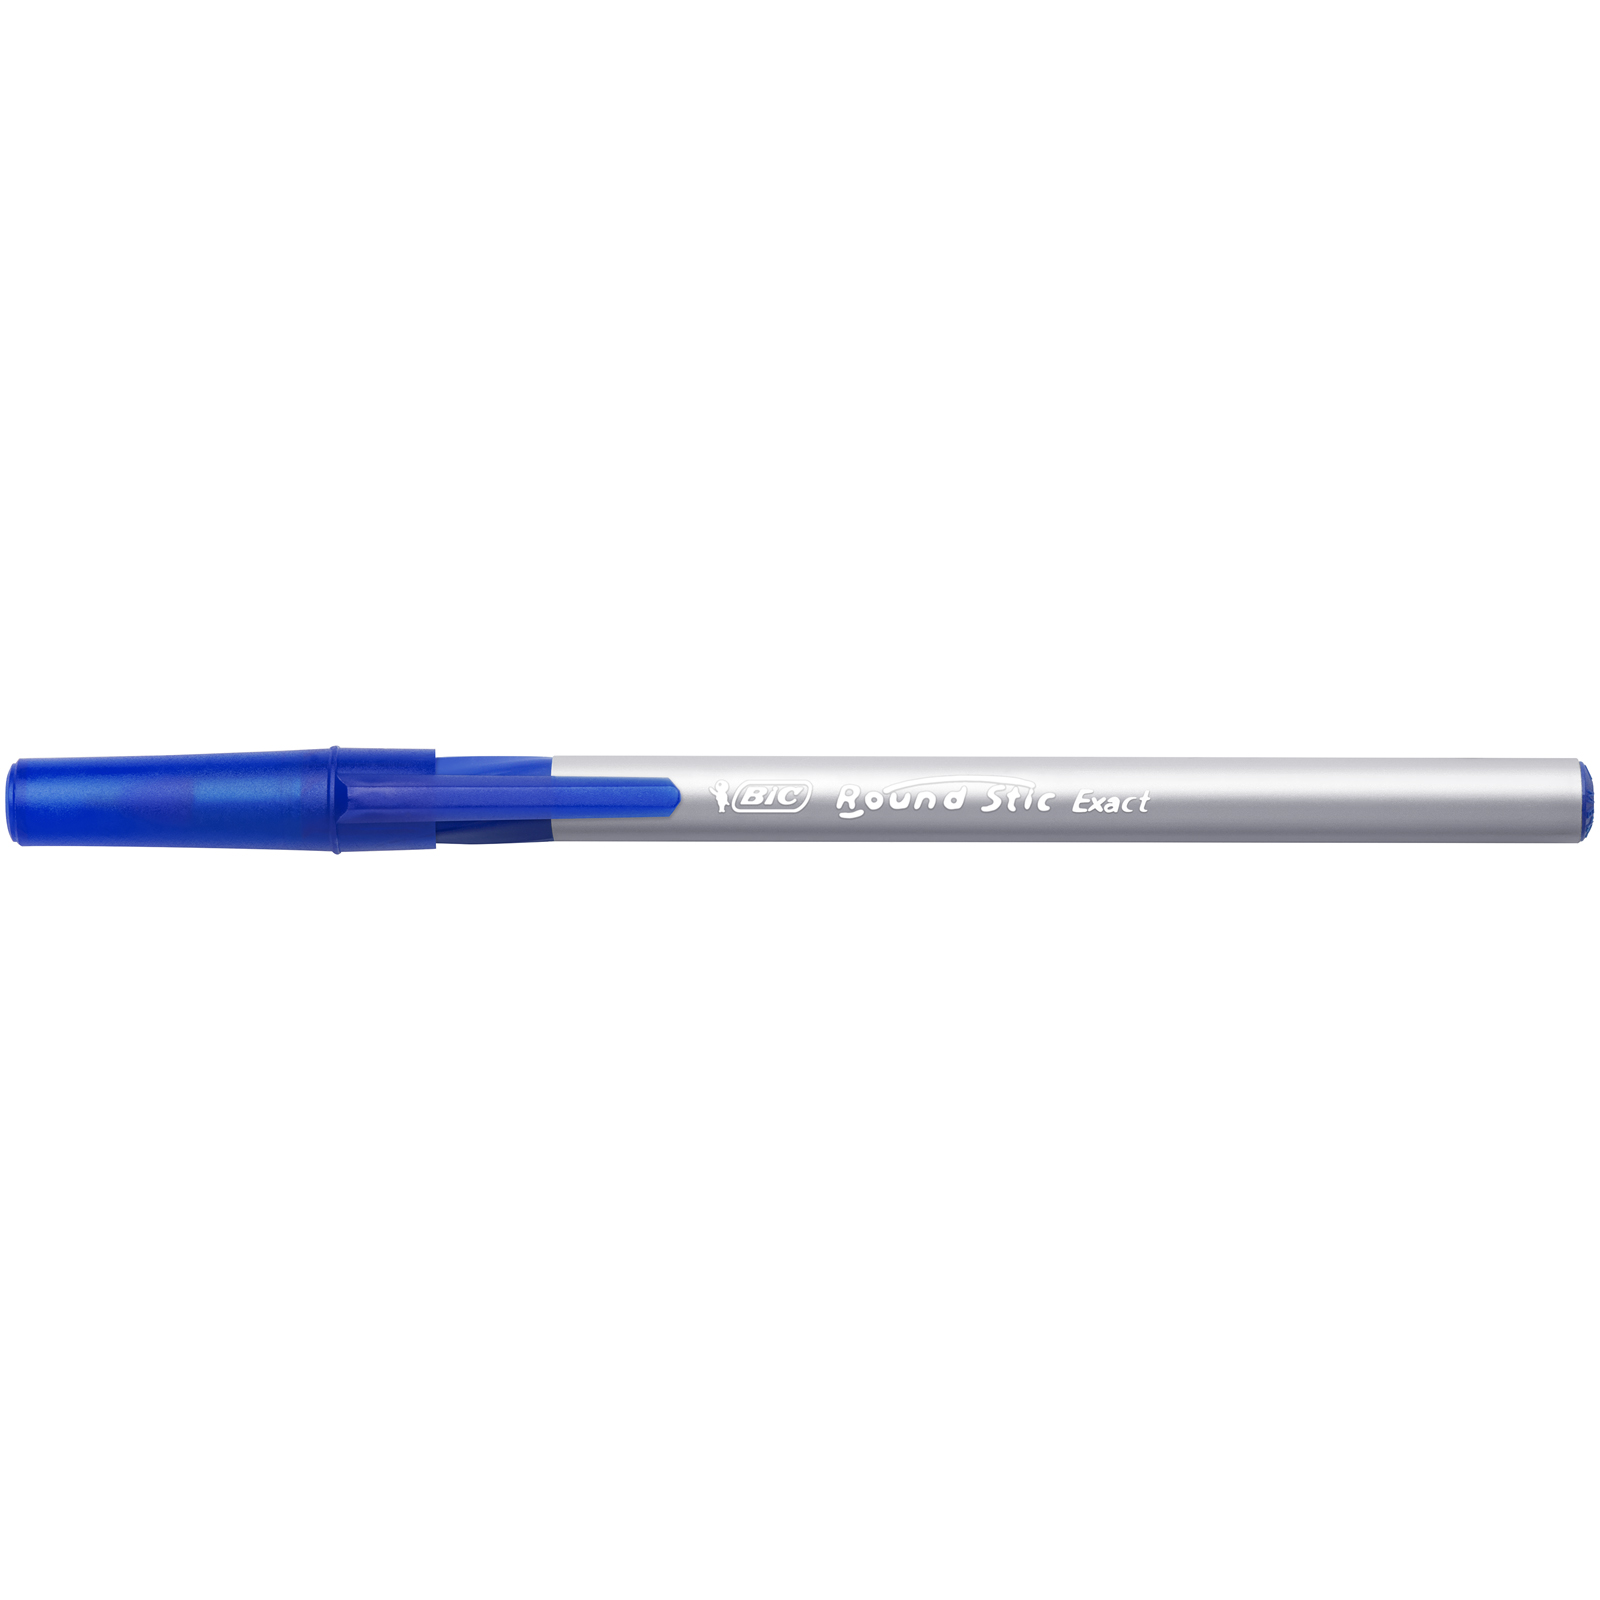 Ручка шариковая BIC Round Stic Exact, 0,36 мм, синий, 8 шт. (932862) - фото 5